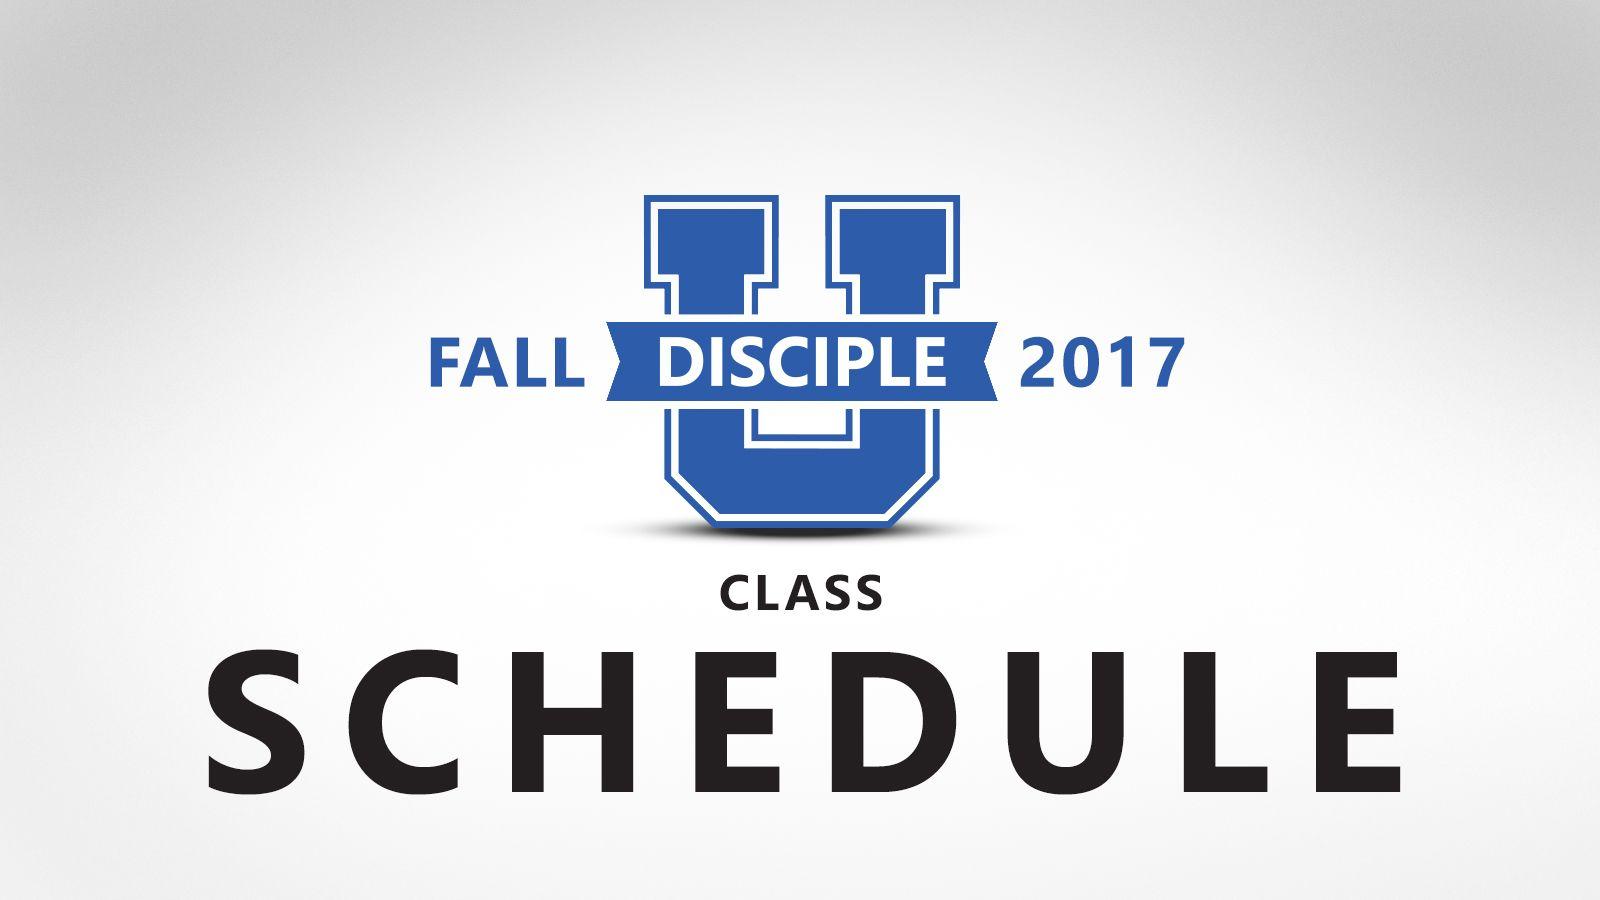 Disciple U Logo - Fall 2017 Disciple U Slide For Website Baptist Church